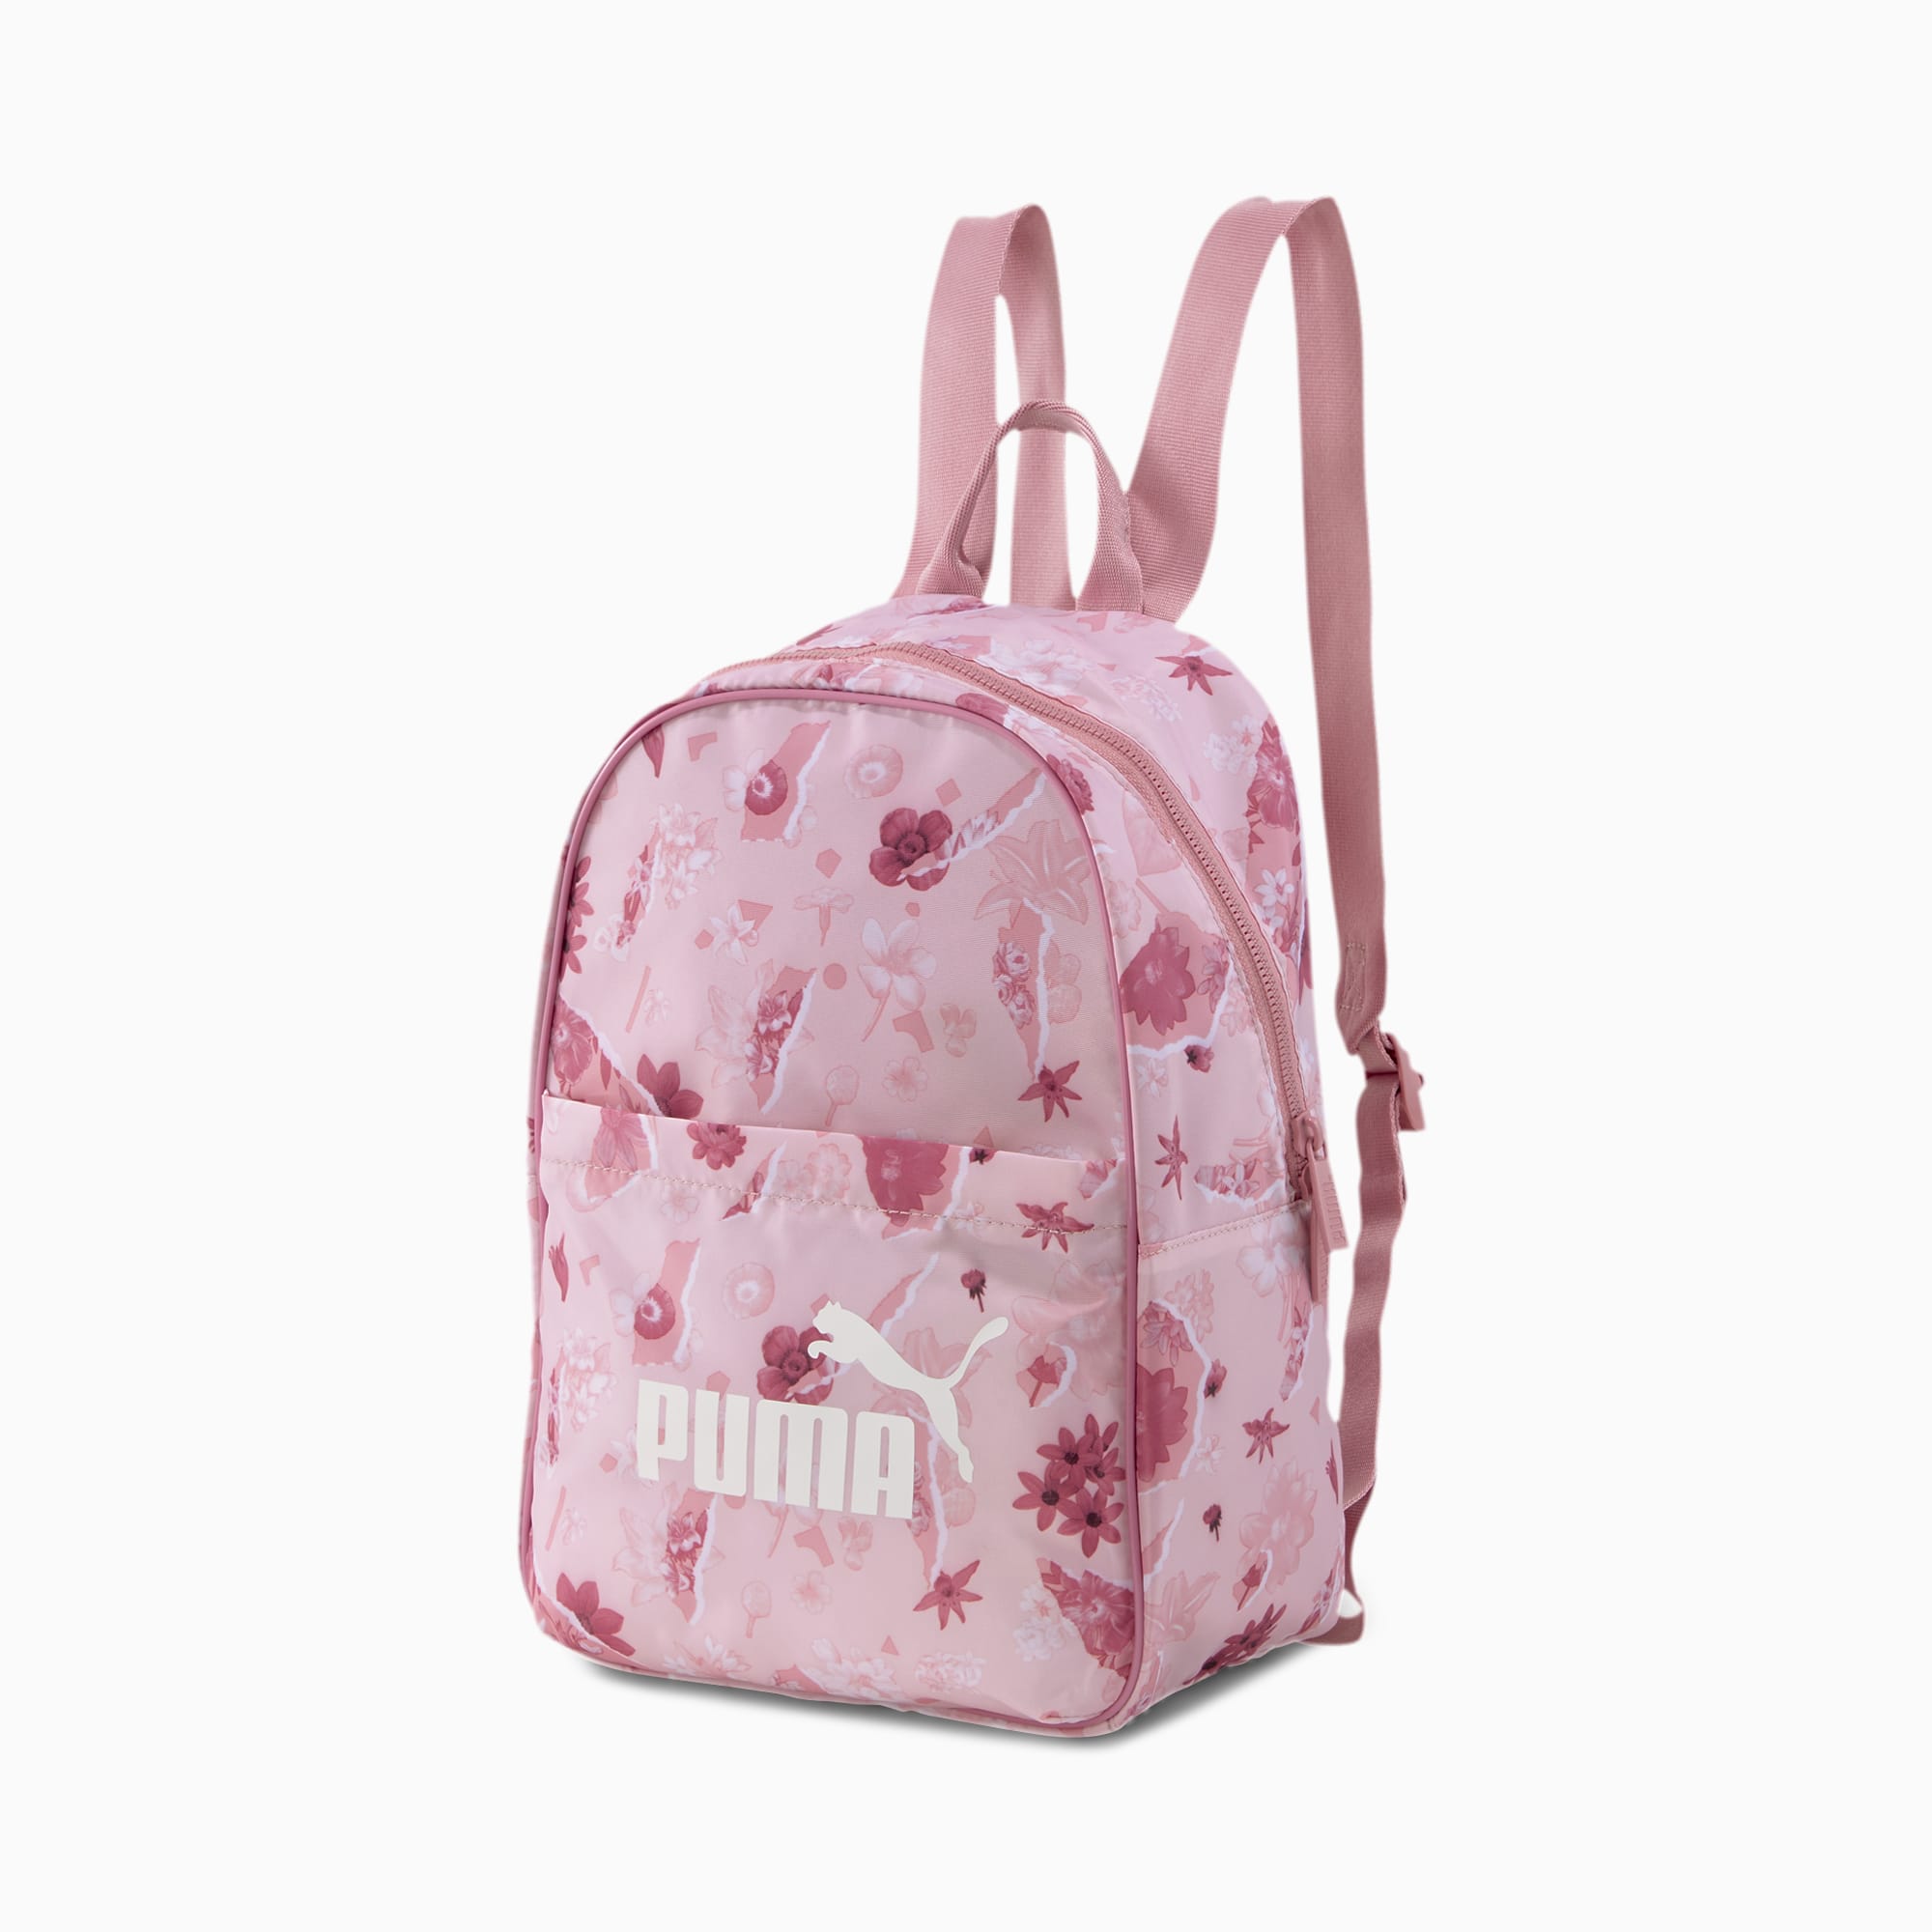 puma core seasonal backpack